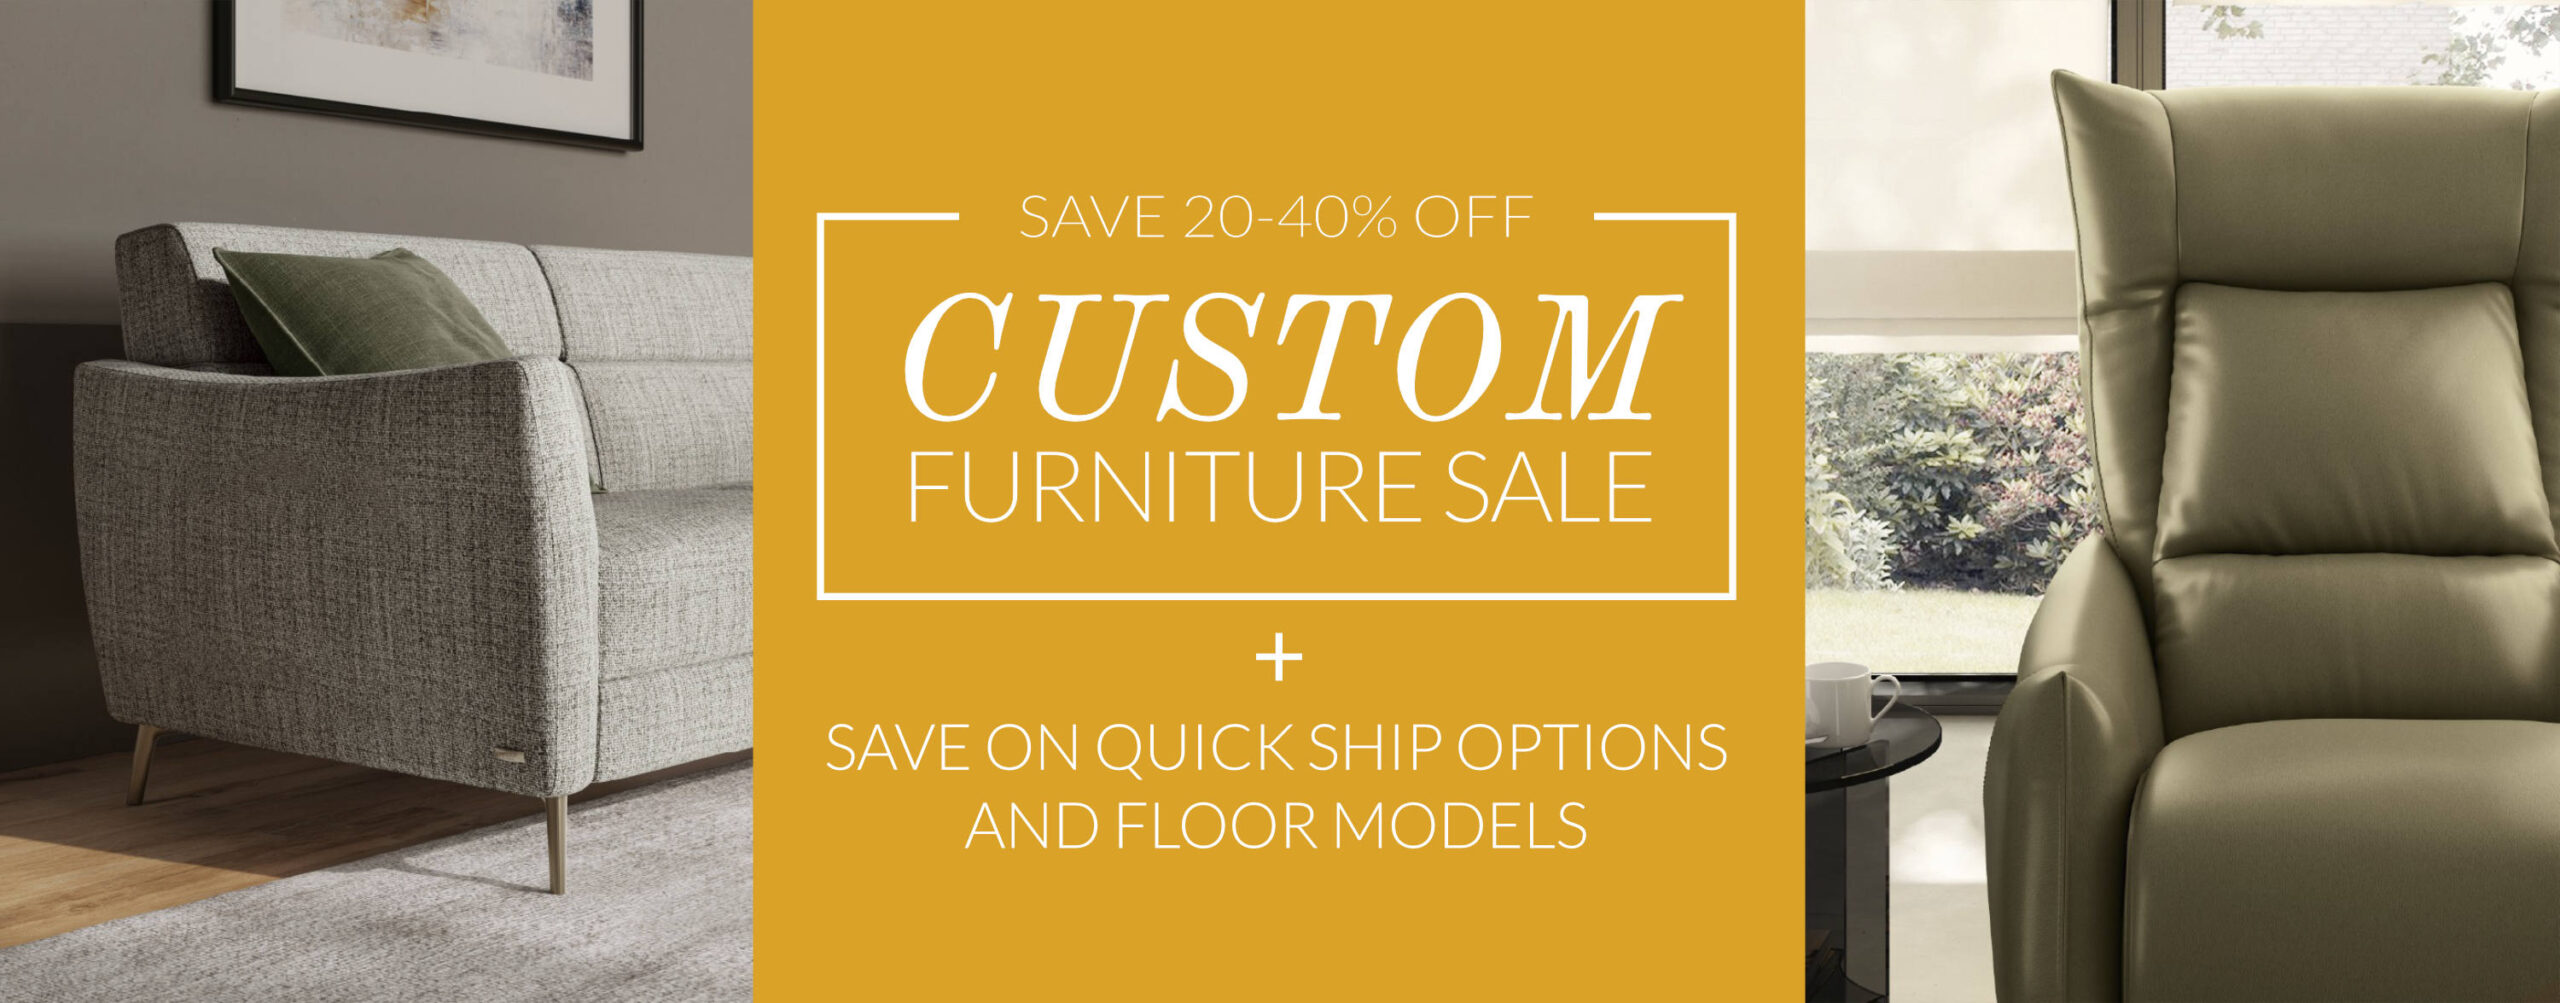 Custom furniture sale on now! Save 20-40% off